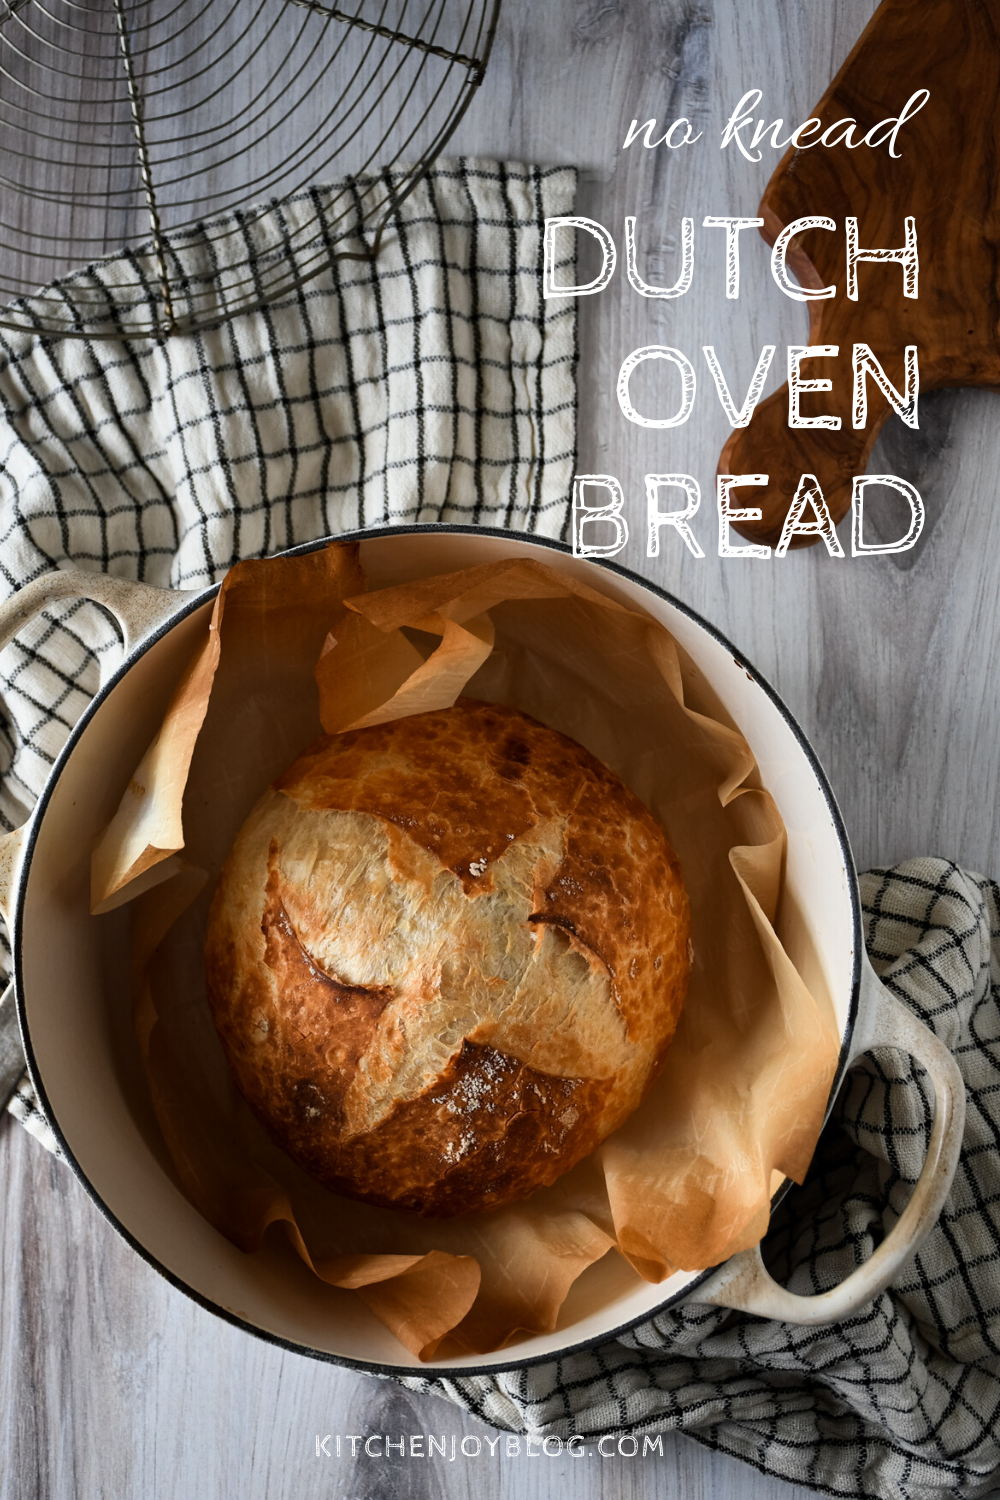 https://kitchenjoyblog.com/wp-content/uploads/2020/03/no-knead-dutch-oven-bread-pinterest.png